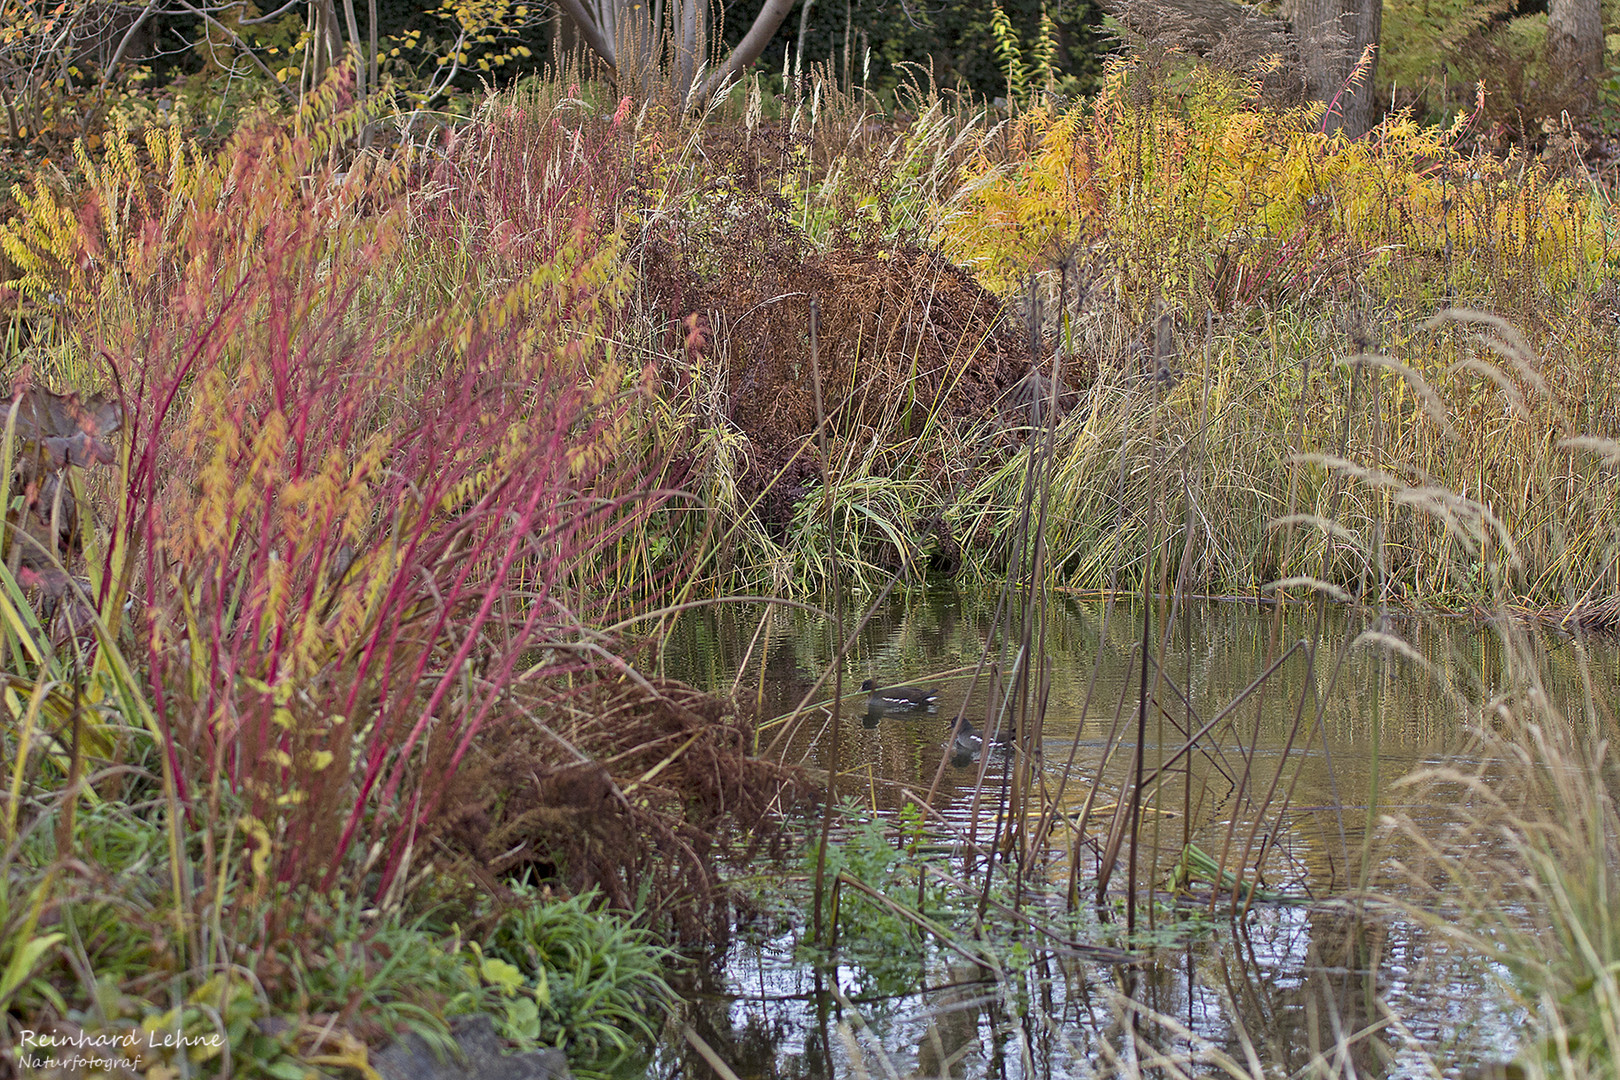  Herbst am Teich